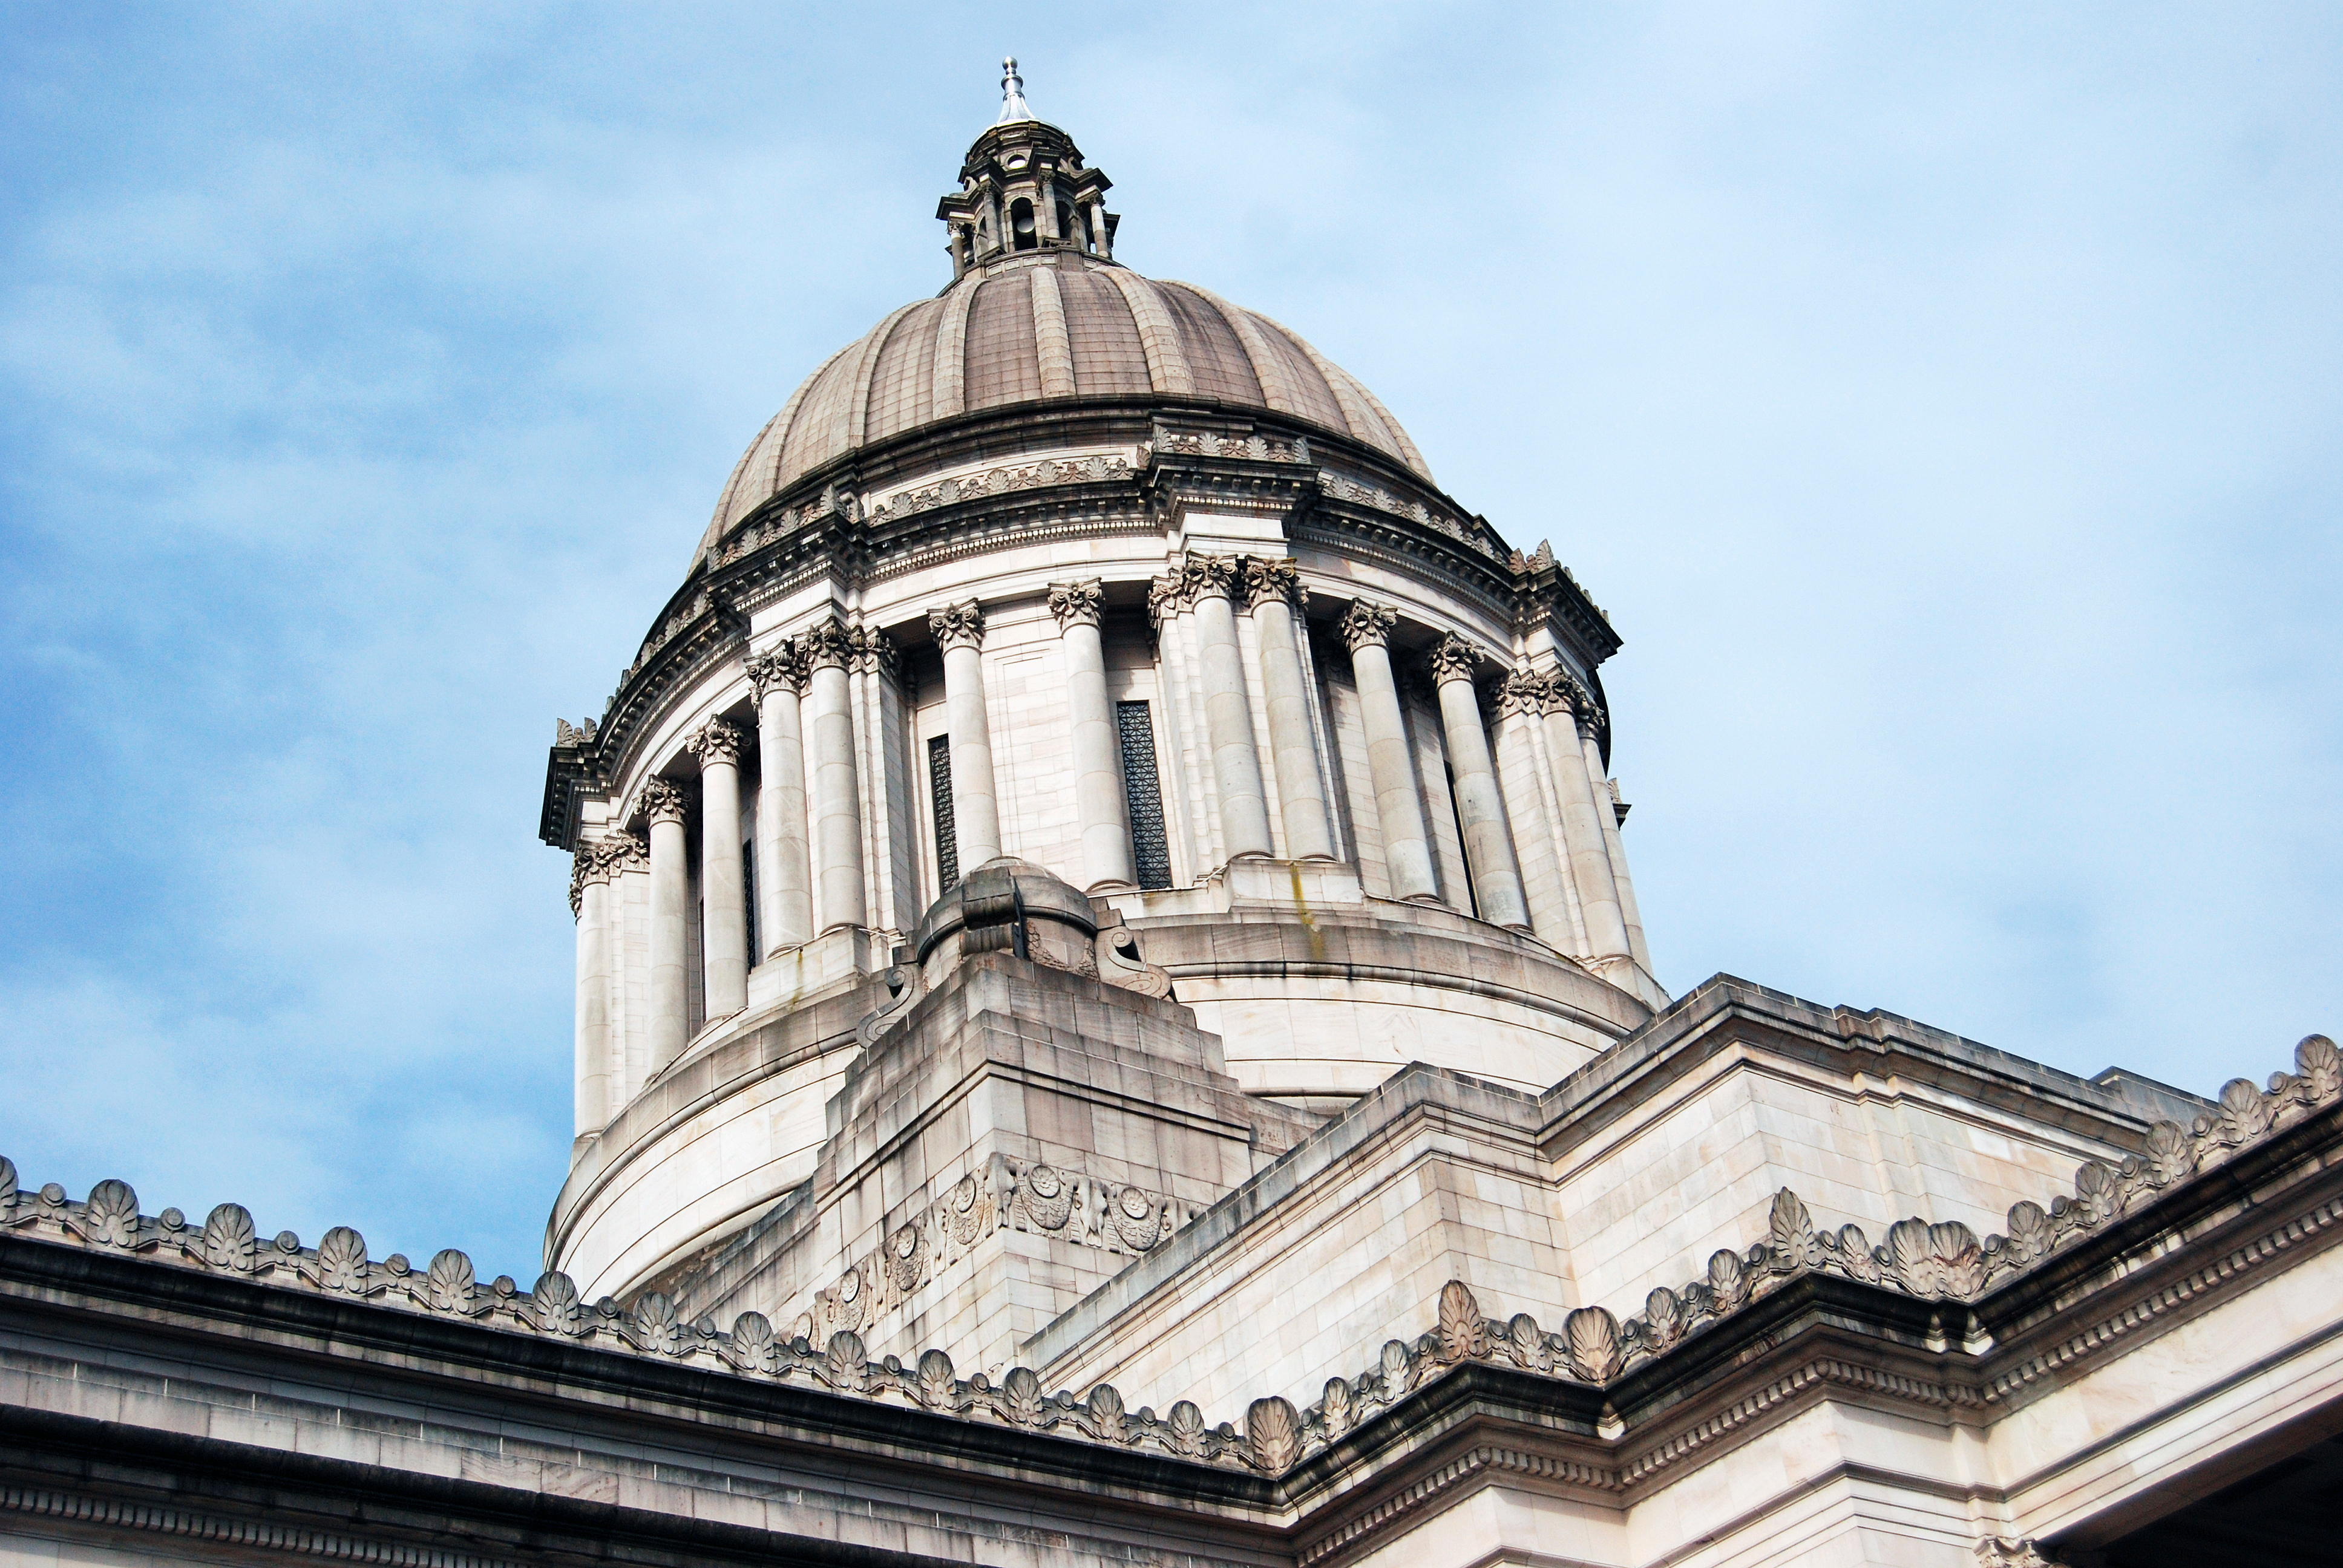 Washington State Capitol Dome